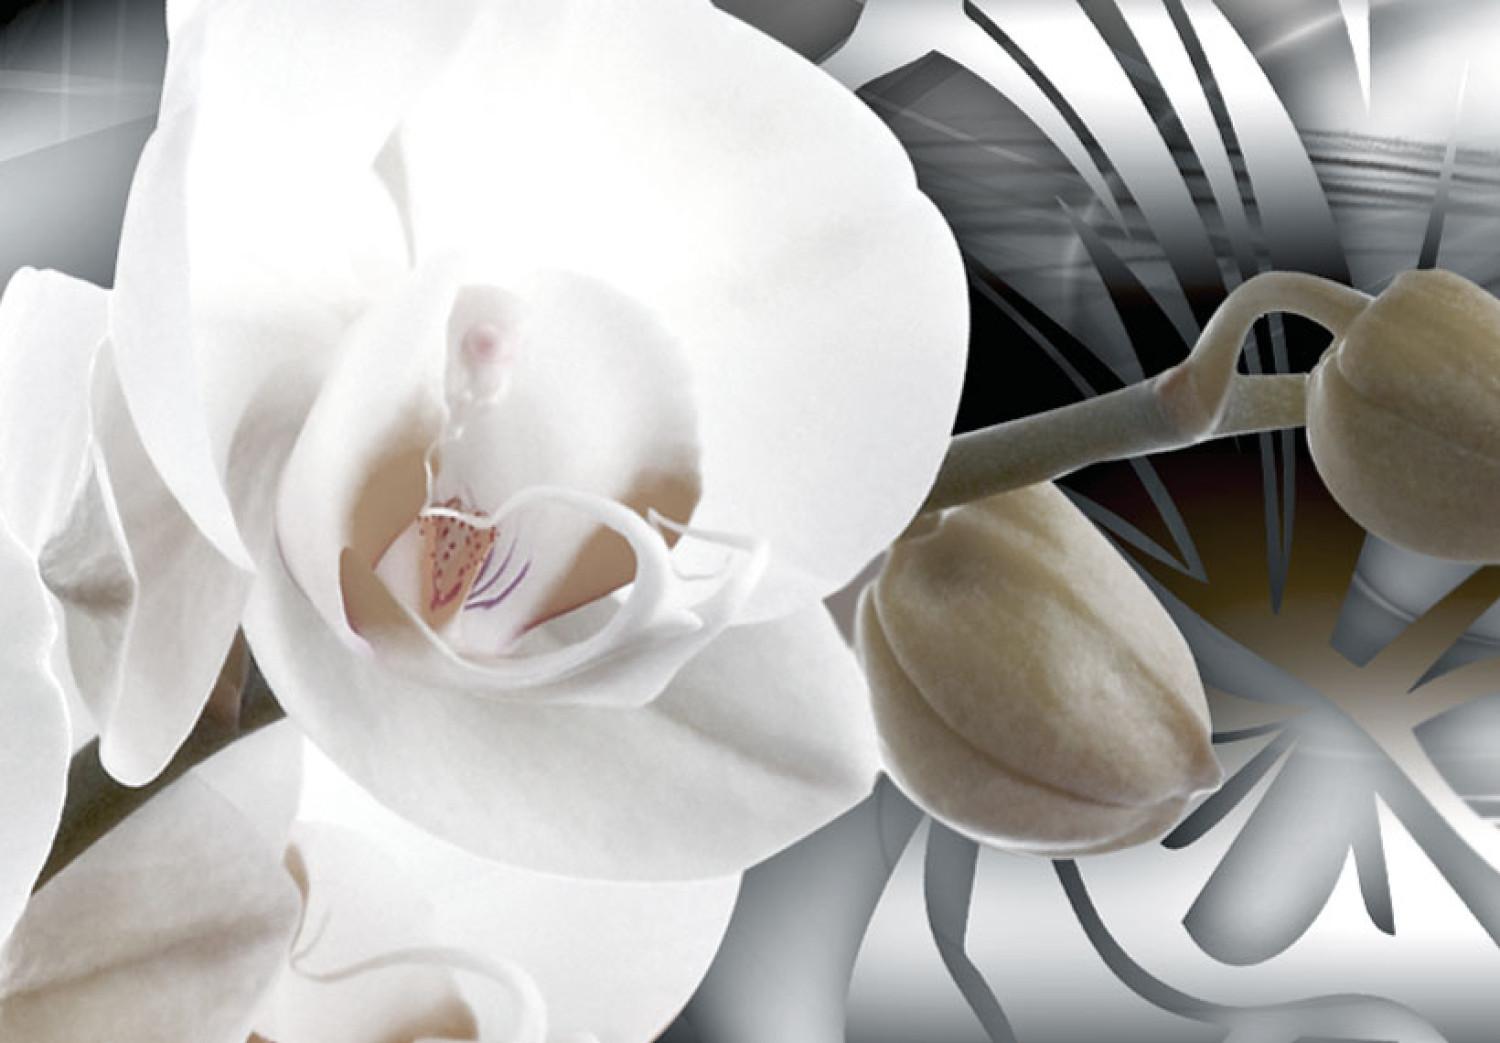 Cuadro decorativo Orquídeas bañadas en platino